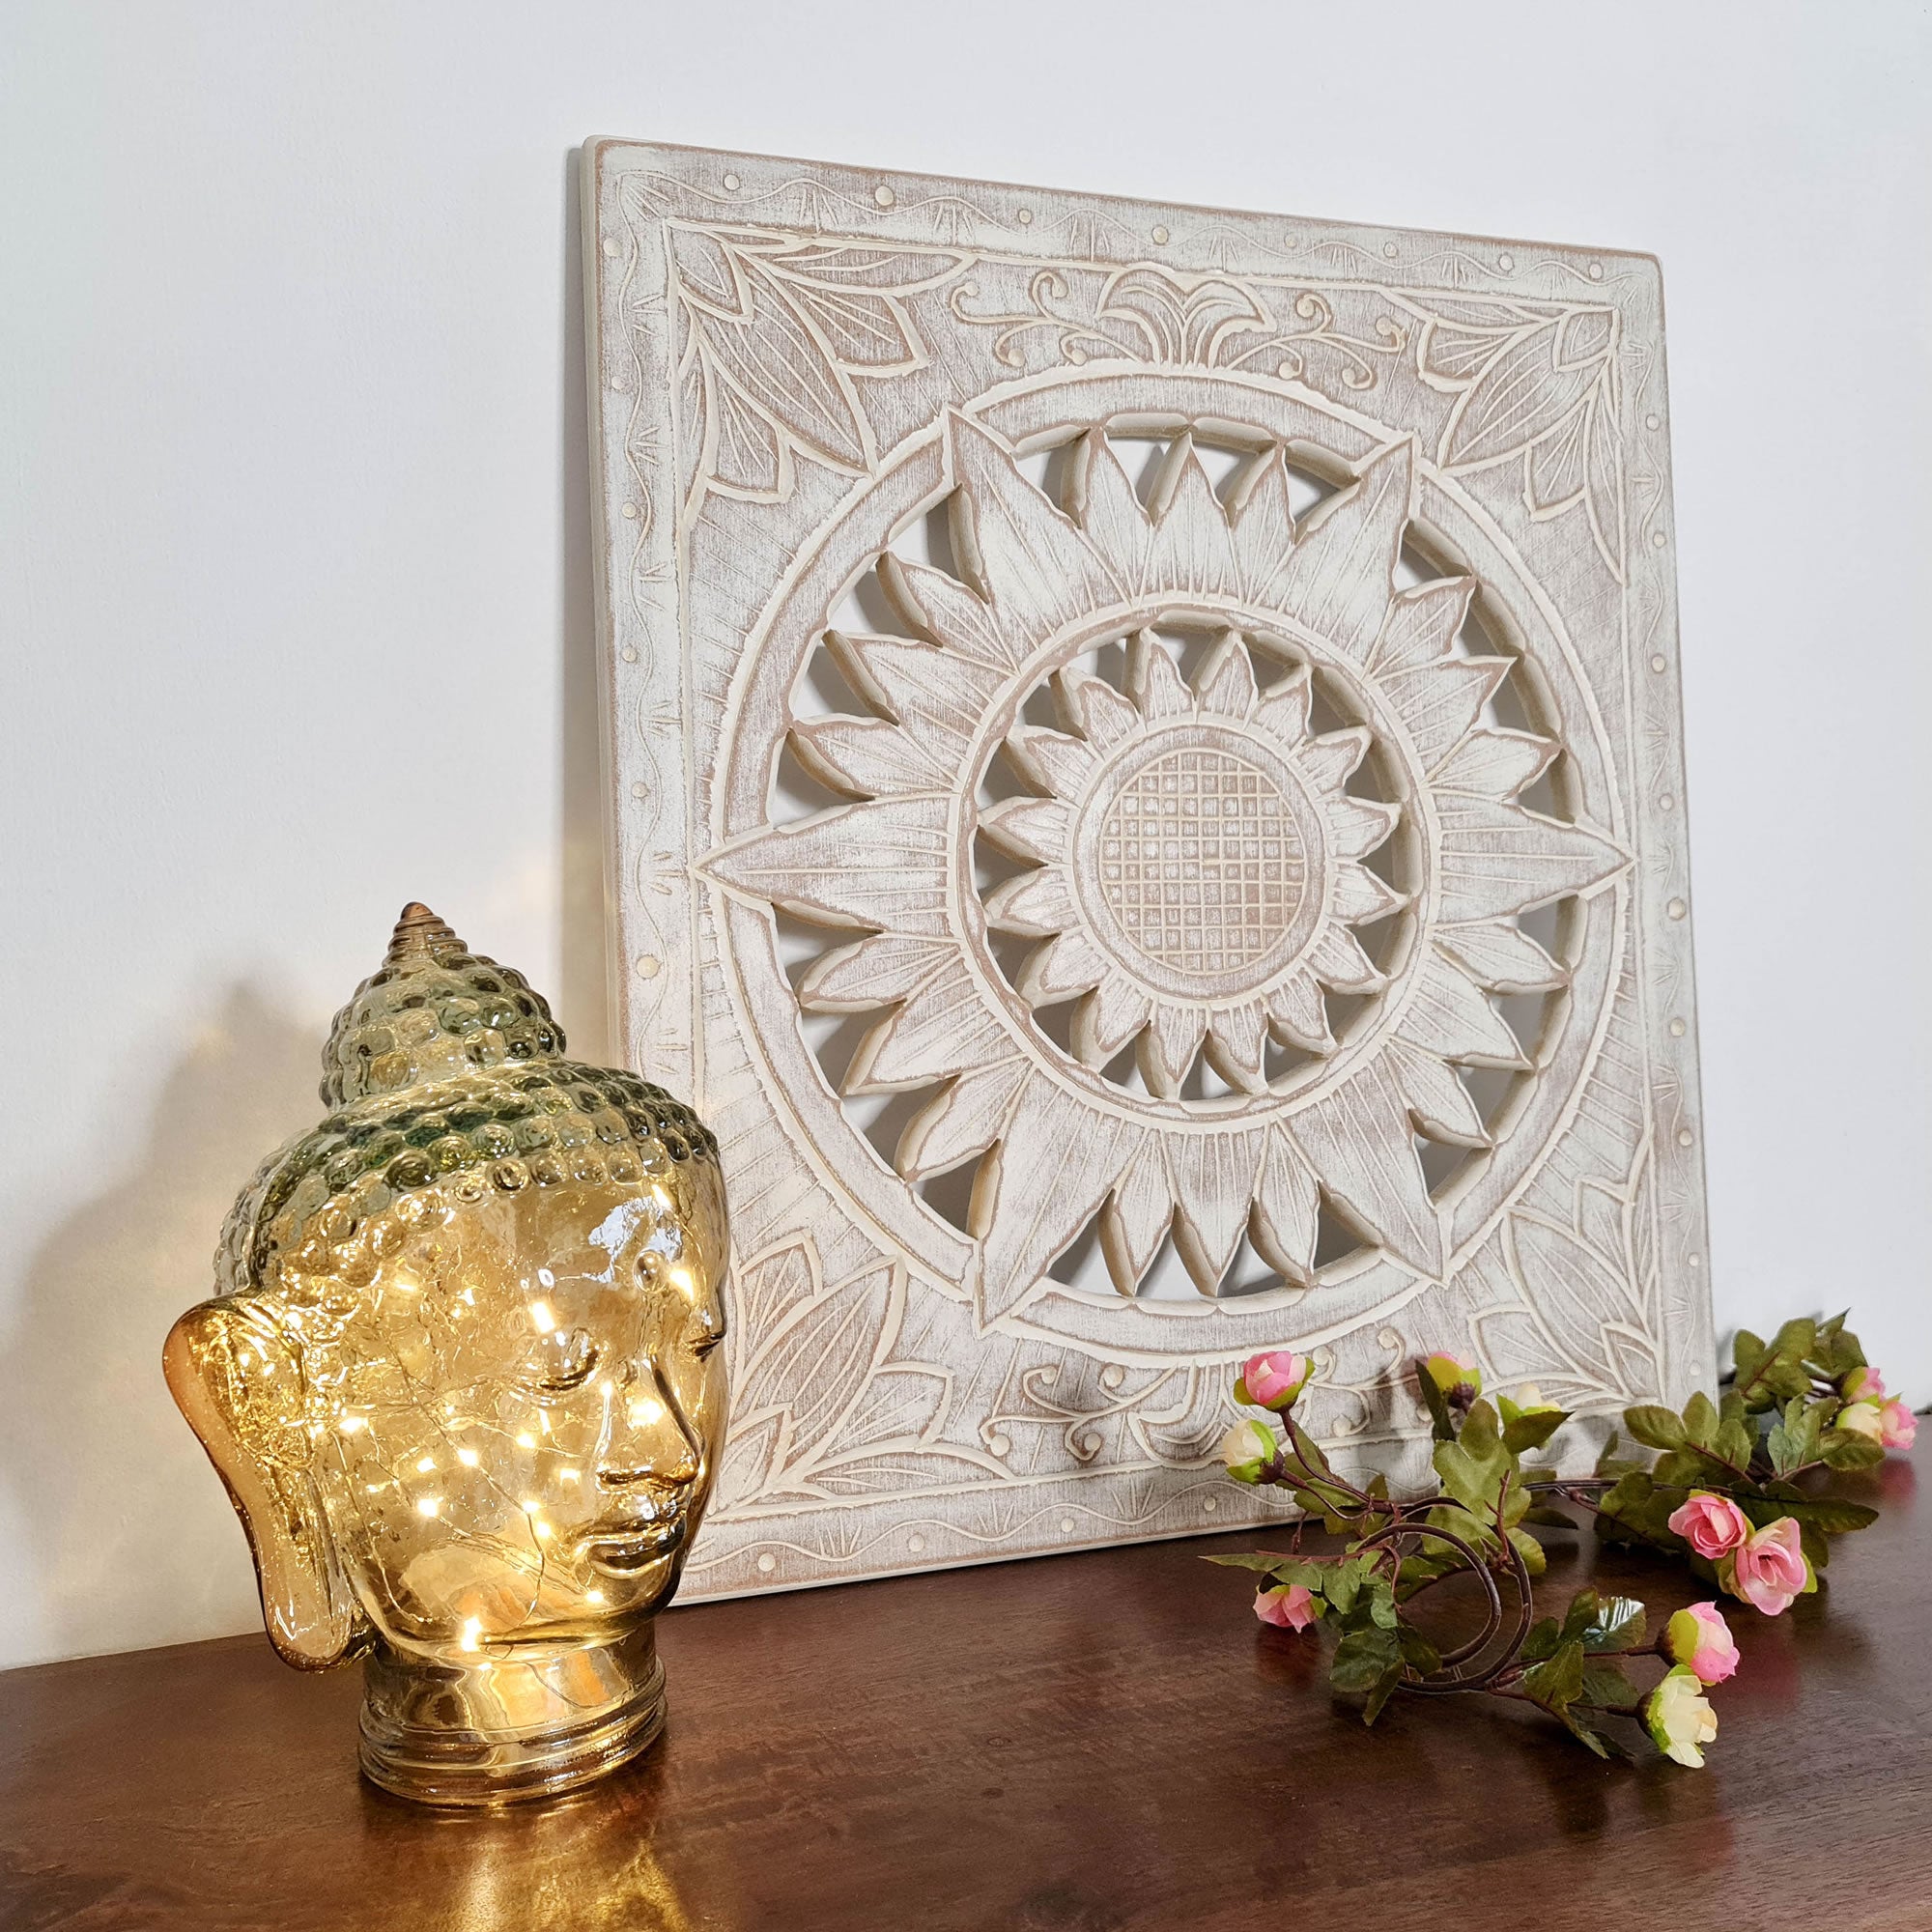 Carved Wooden Wall Art - Decorative Mandala Yoga Distressed Eco Panel Headboard Sculpture Easternada Gift